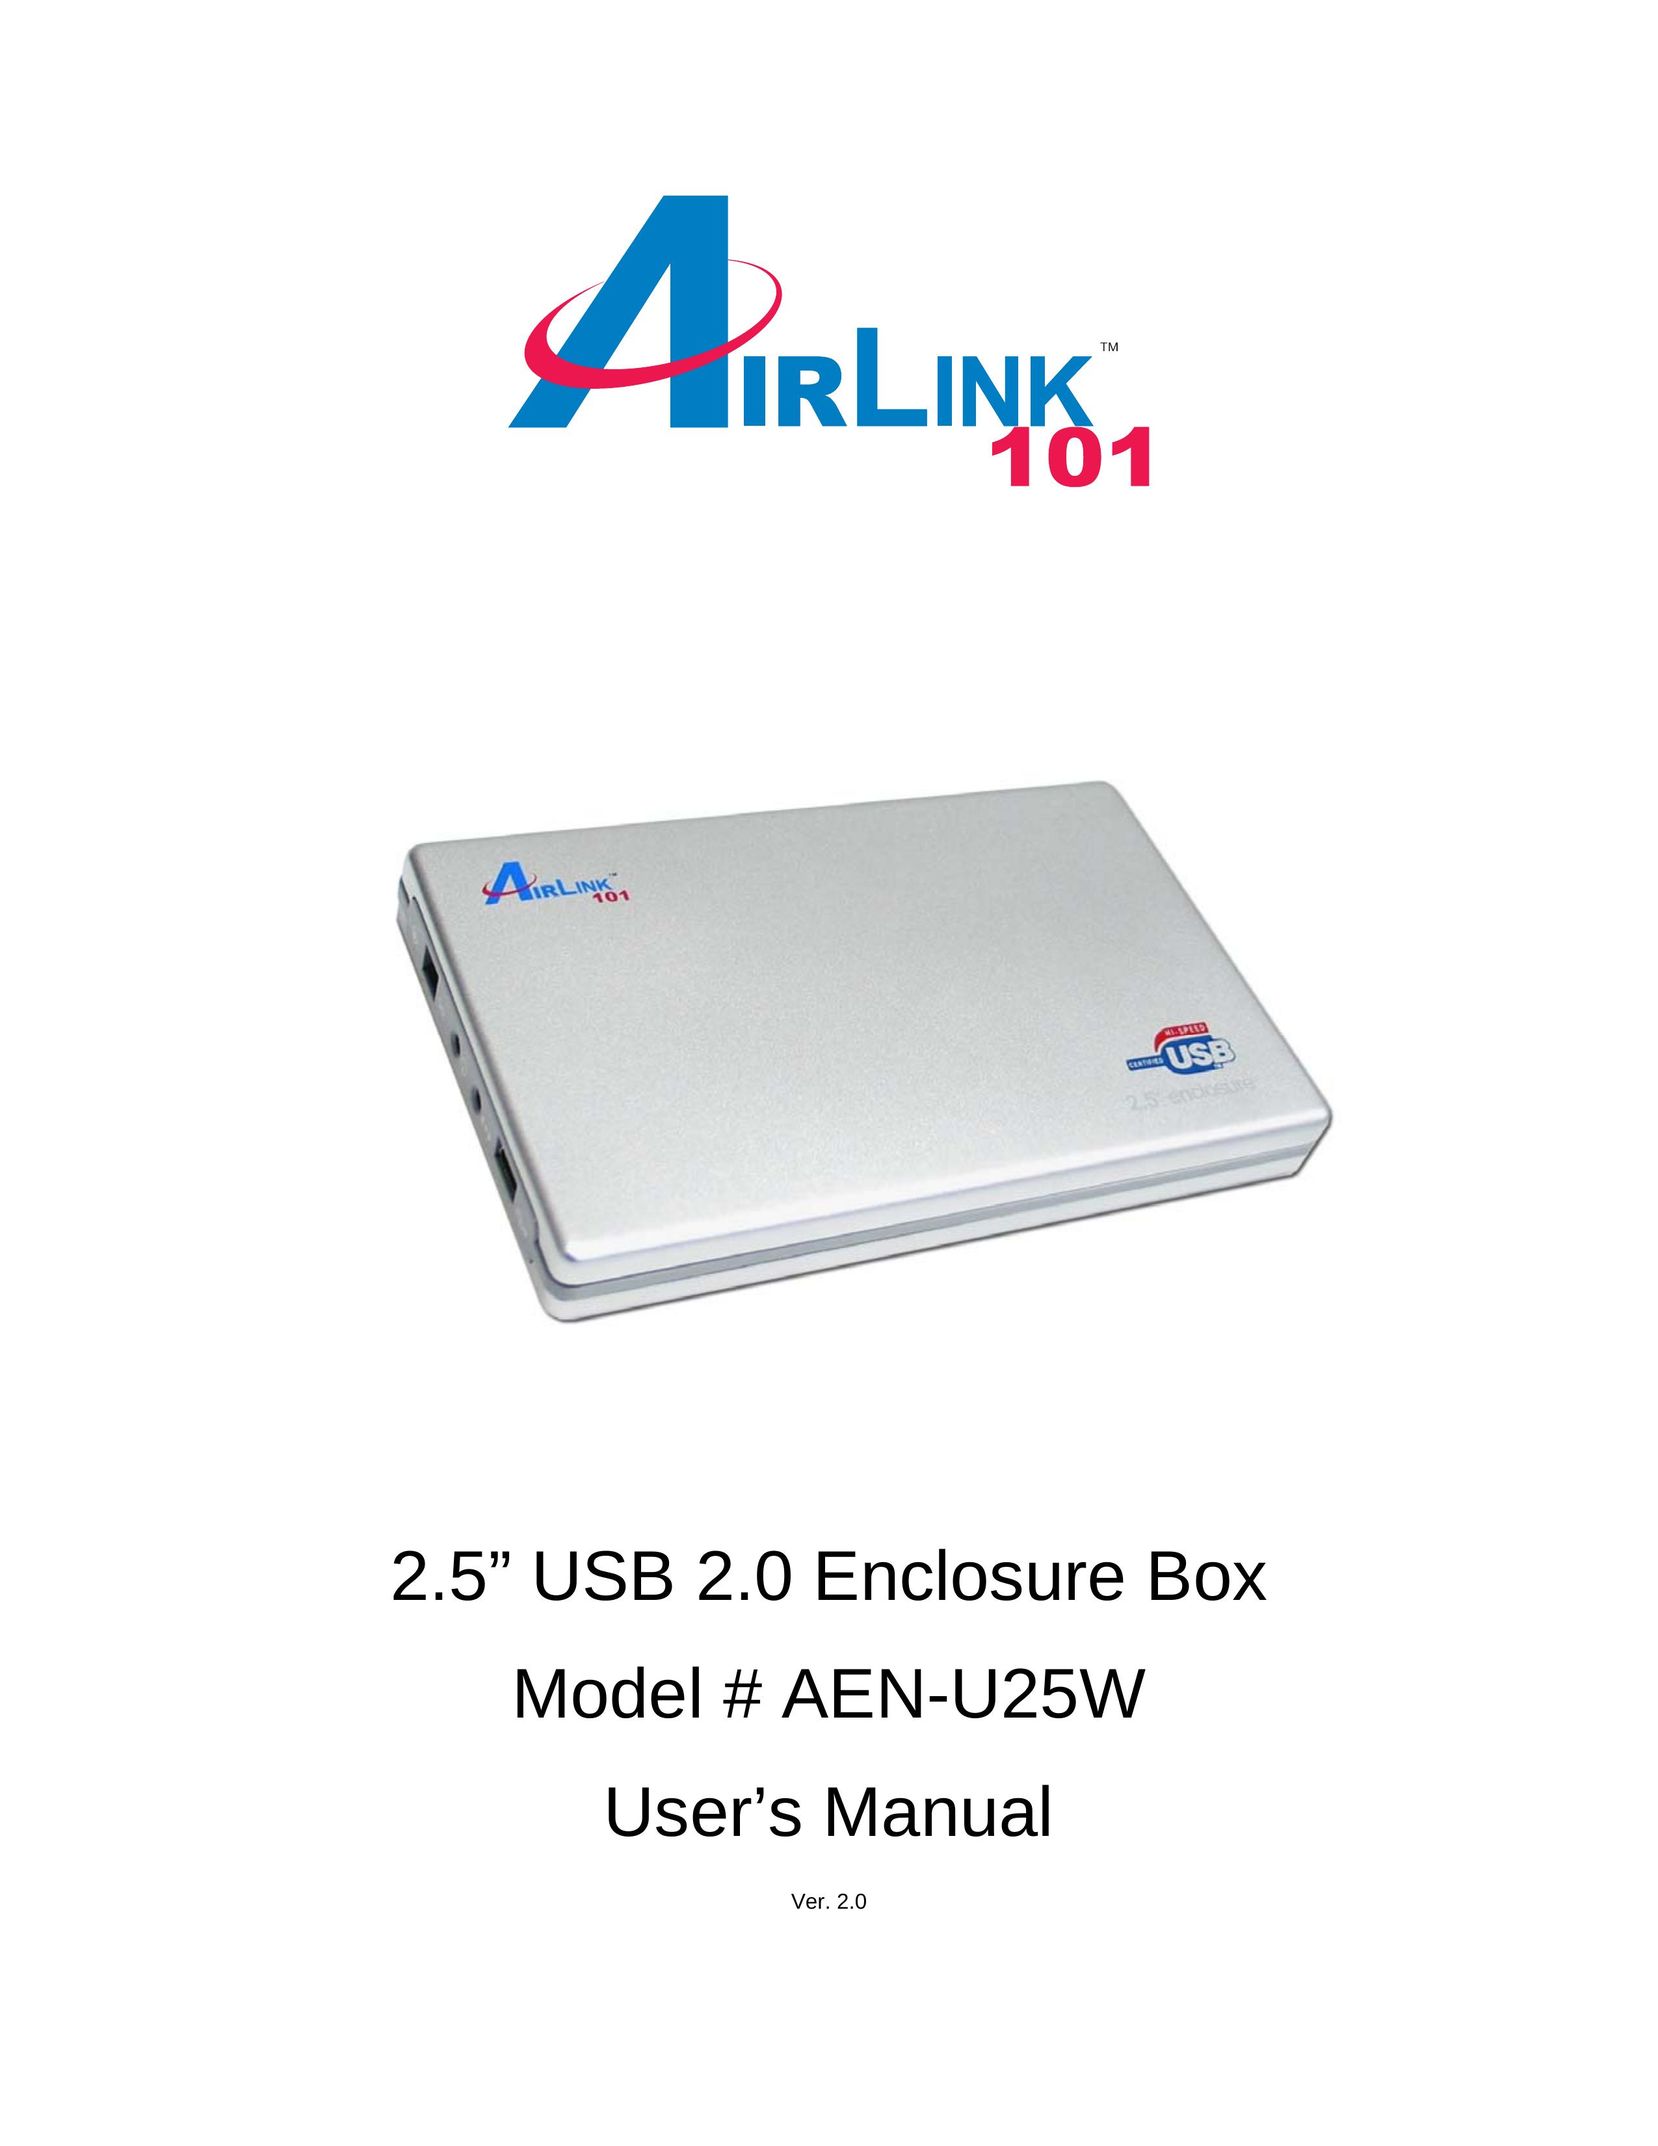 Airlink101 AEN-U25W Computer Drive User Manual